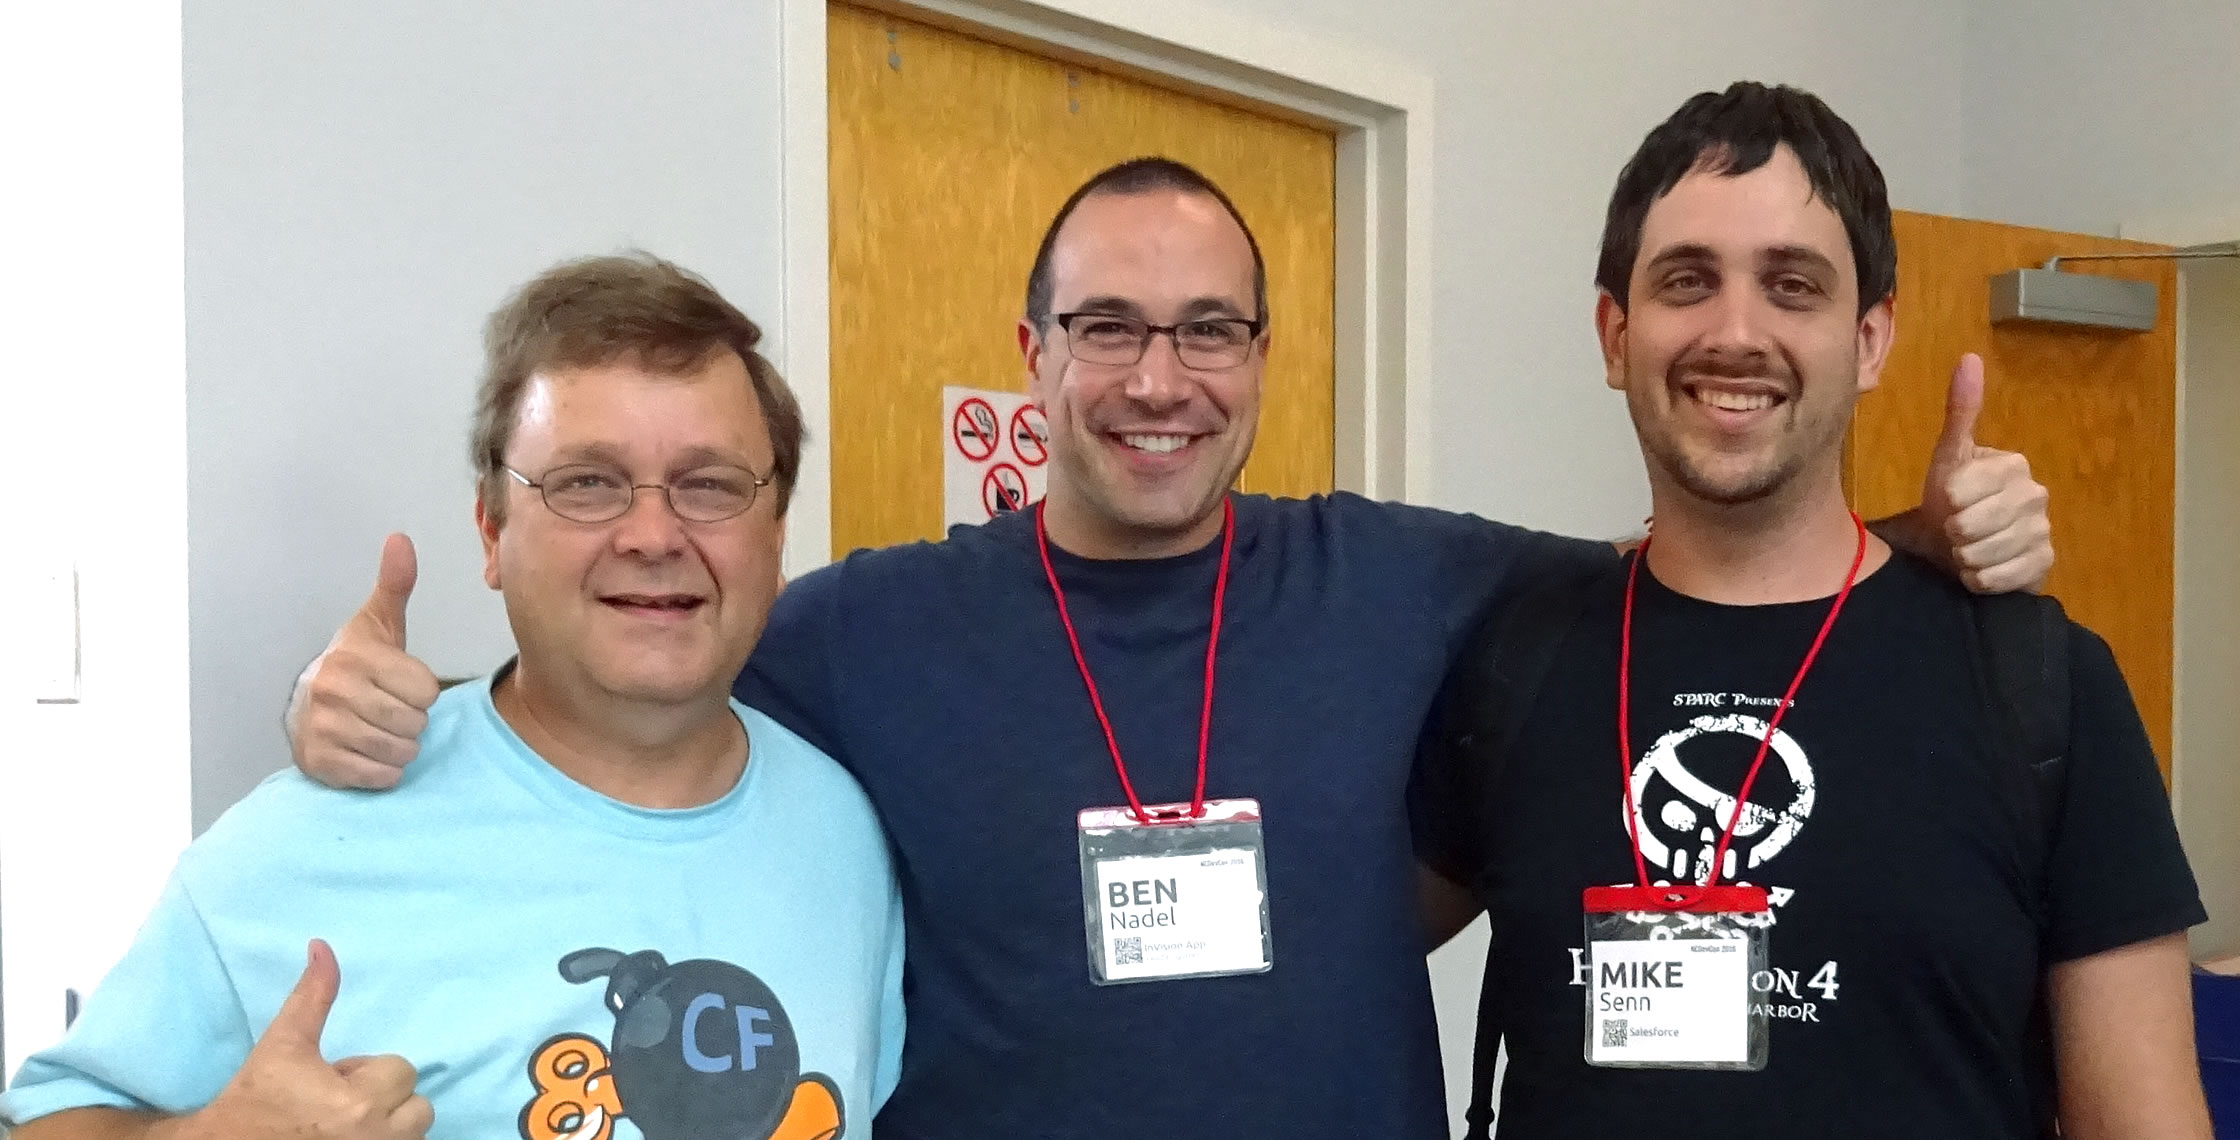 Ben Nadel at NCDevCon 2016 (Raleigh, NC) with: Phillip Senn and Michael Senn